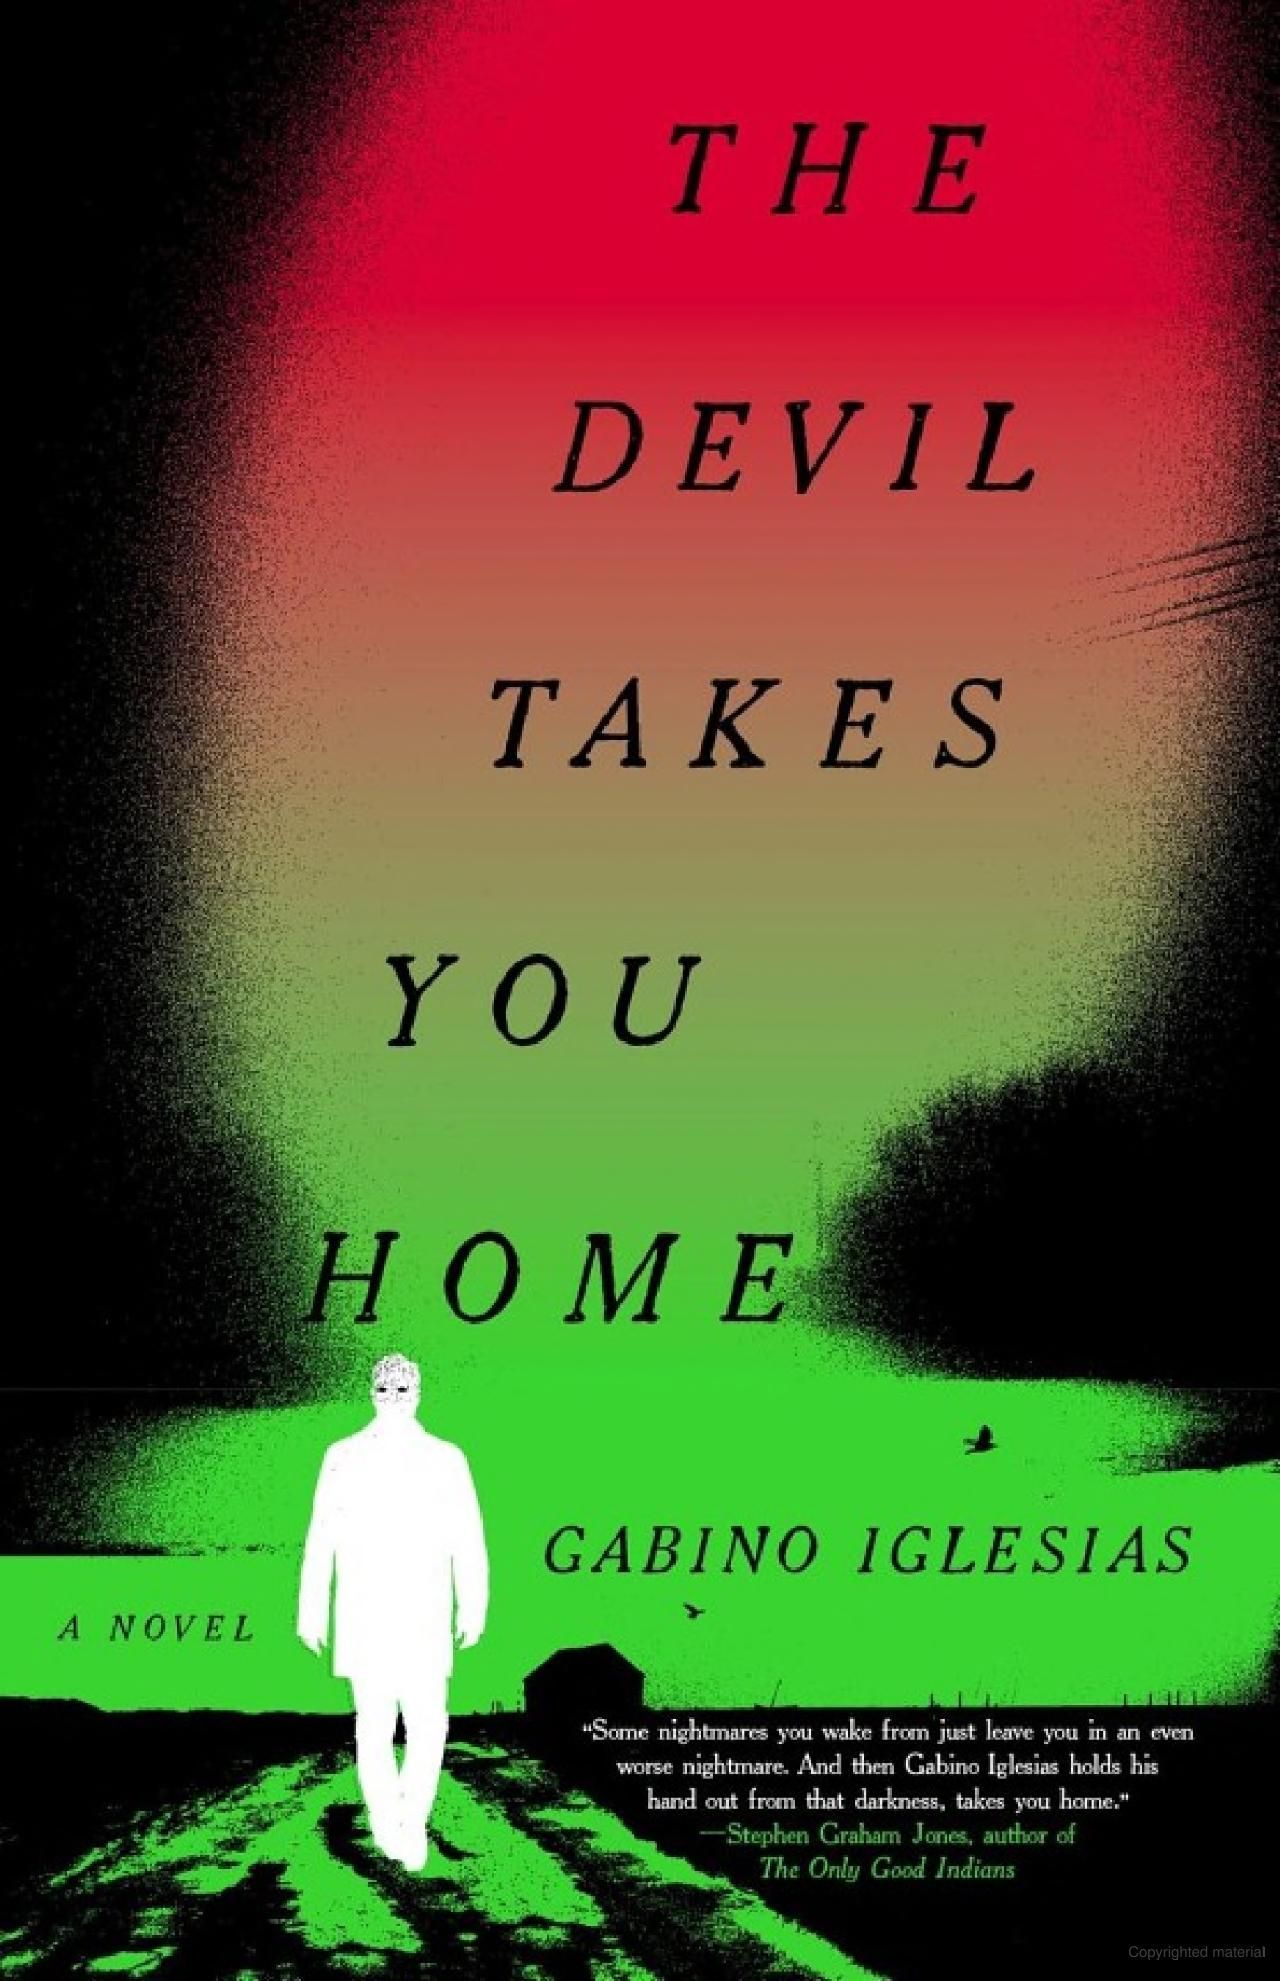 Three Questions for Gabino Iglesias Regarding His Novel “The Devil Takes You Home”